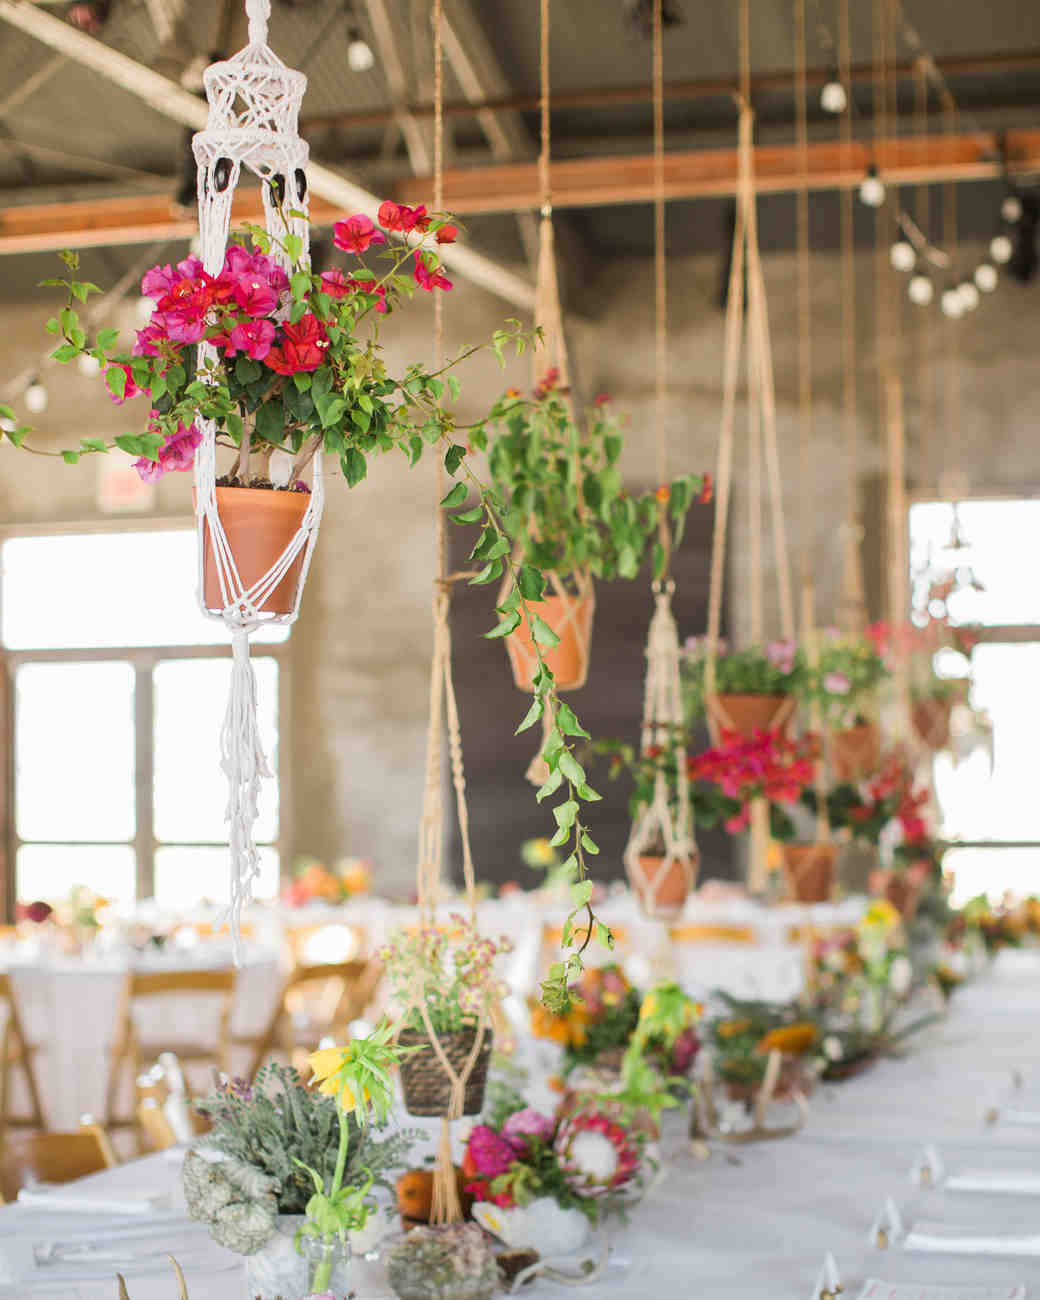 Wedding Table Flower Arrangements
 40 of Our Favorite Floral Wedding Centerpieces